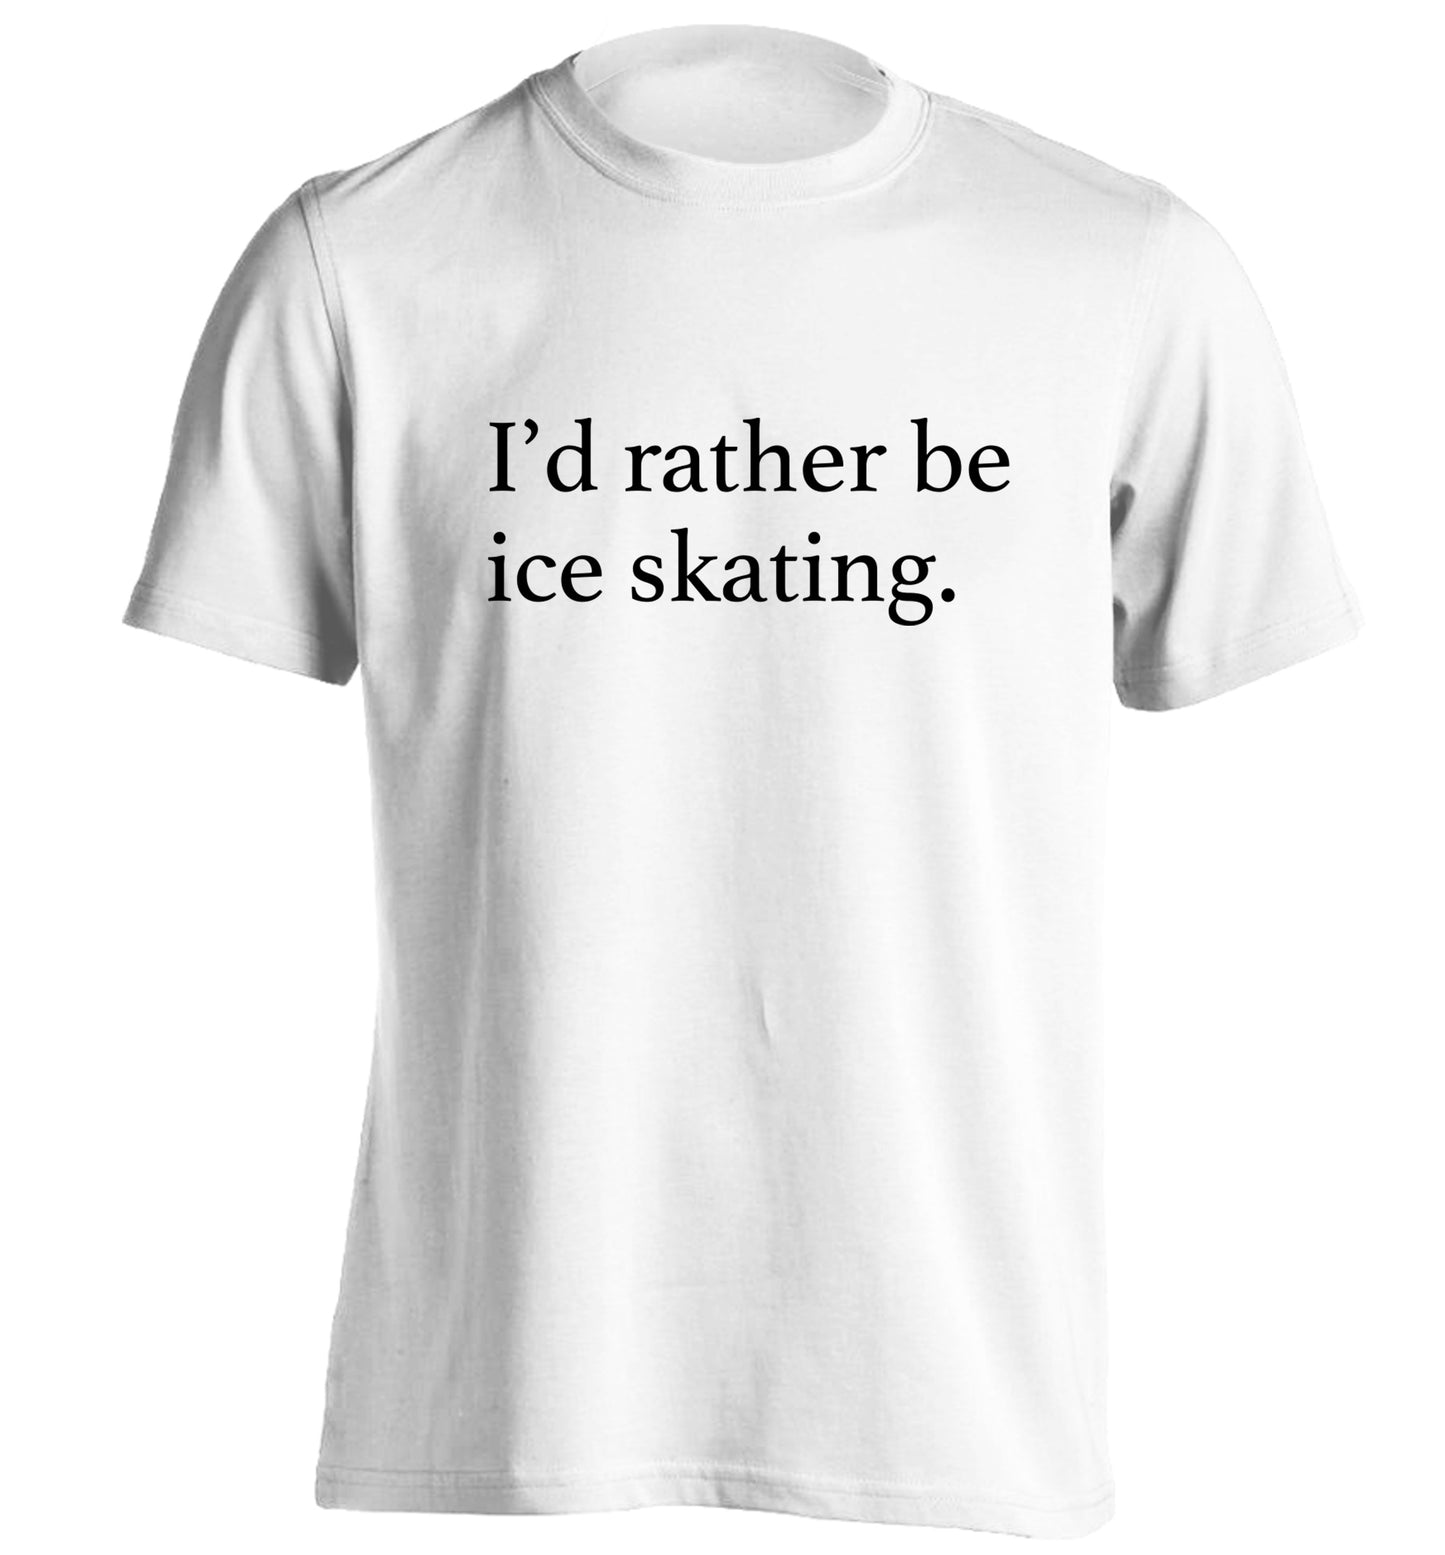 I'd rather be ice skating adults unisexwhite Tshirt 2XL